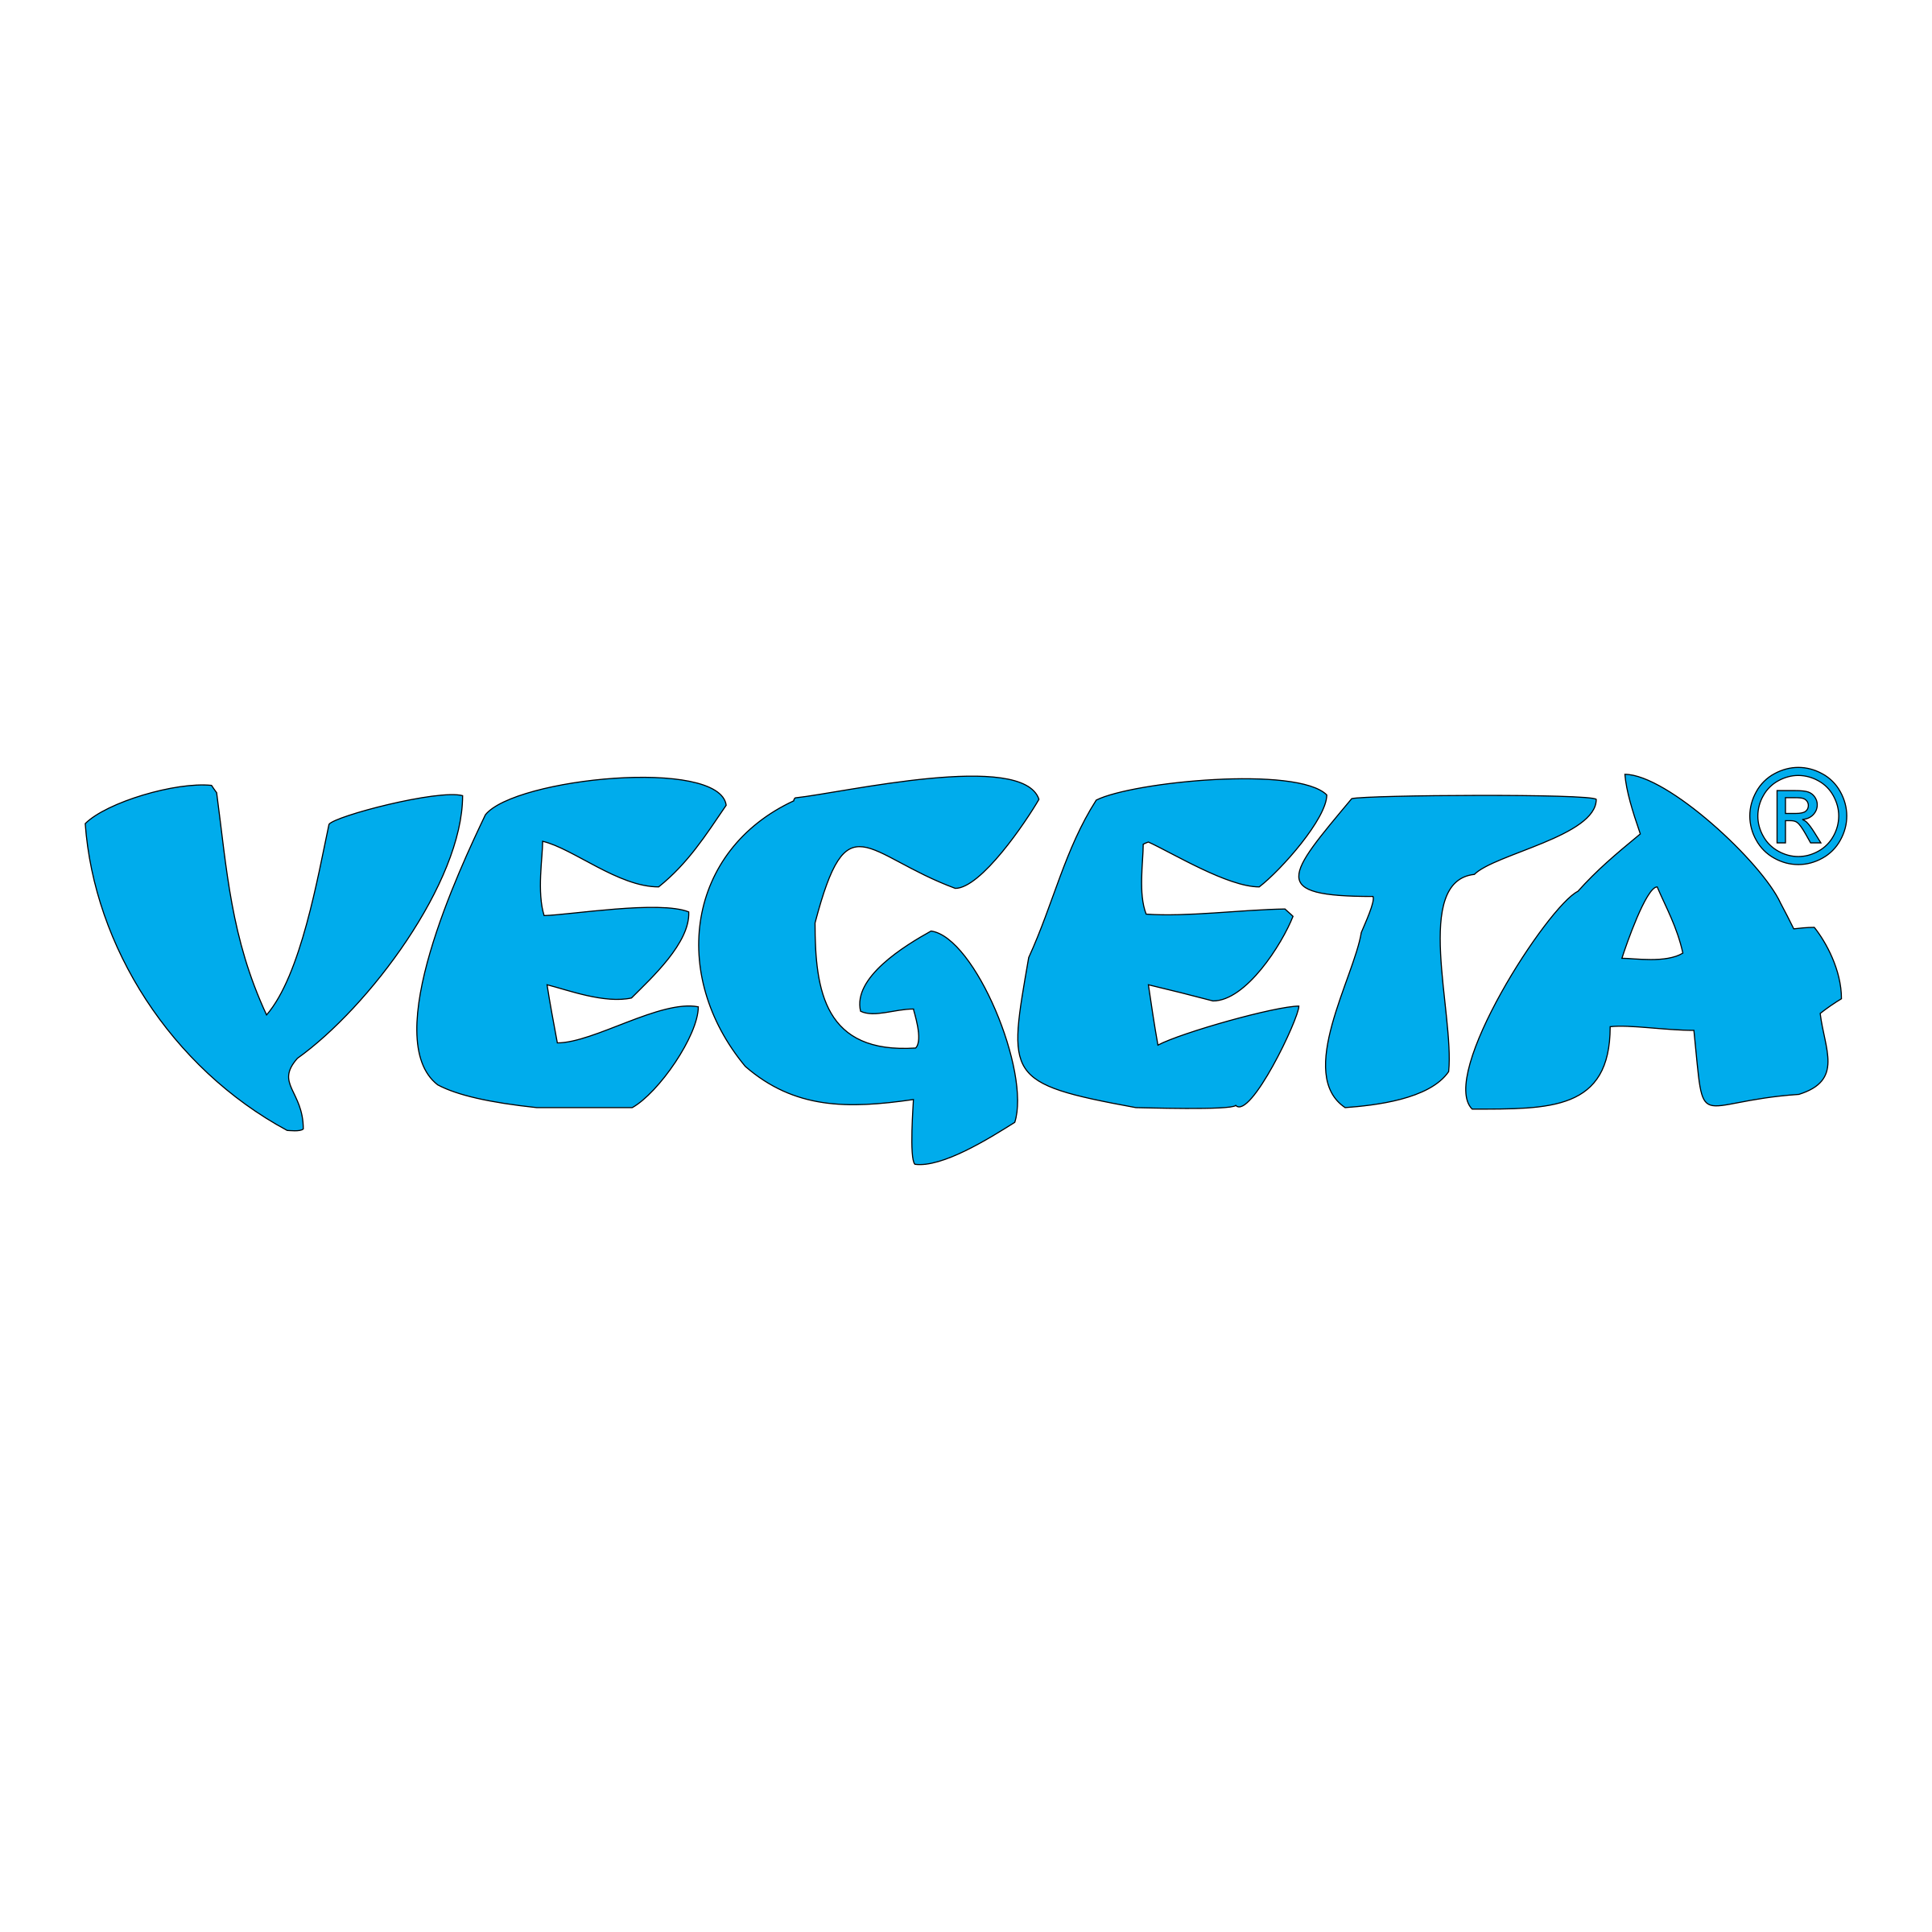 Vegeta Logo - Vegeta Logo PNG Transparent & SVG Vector